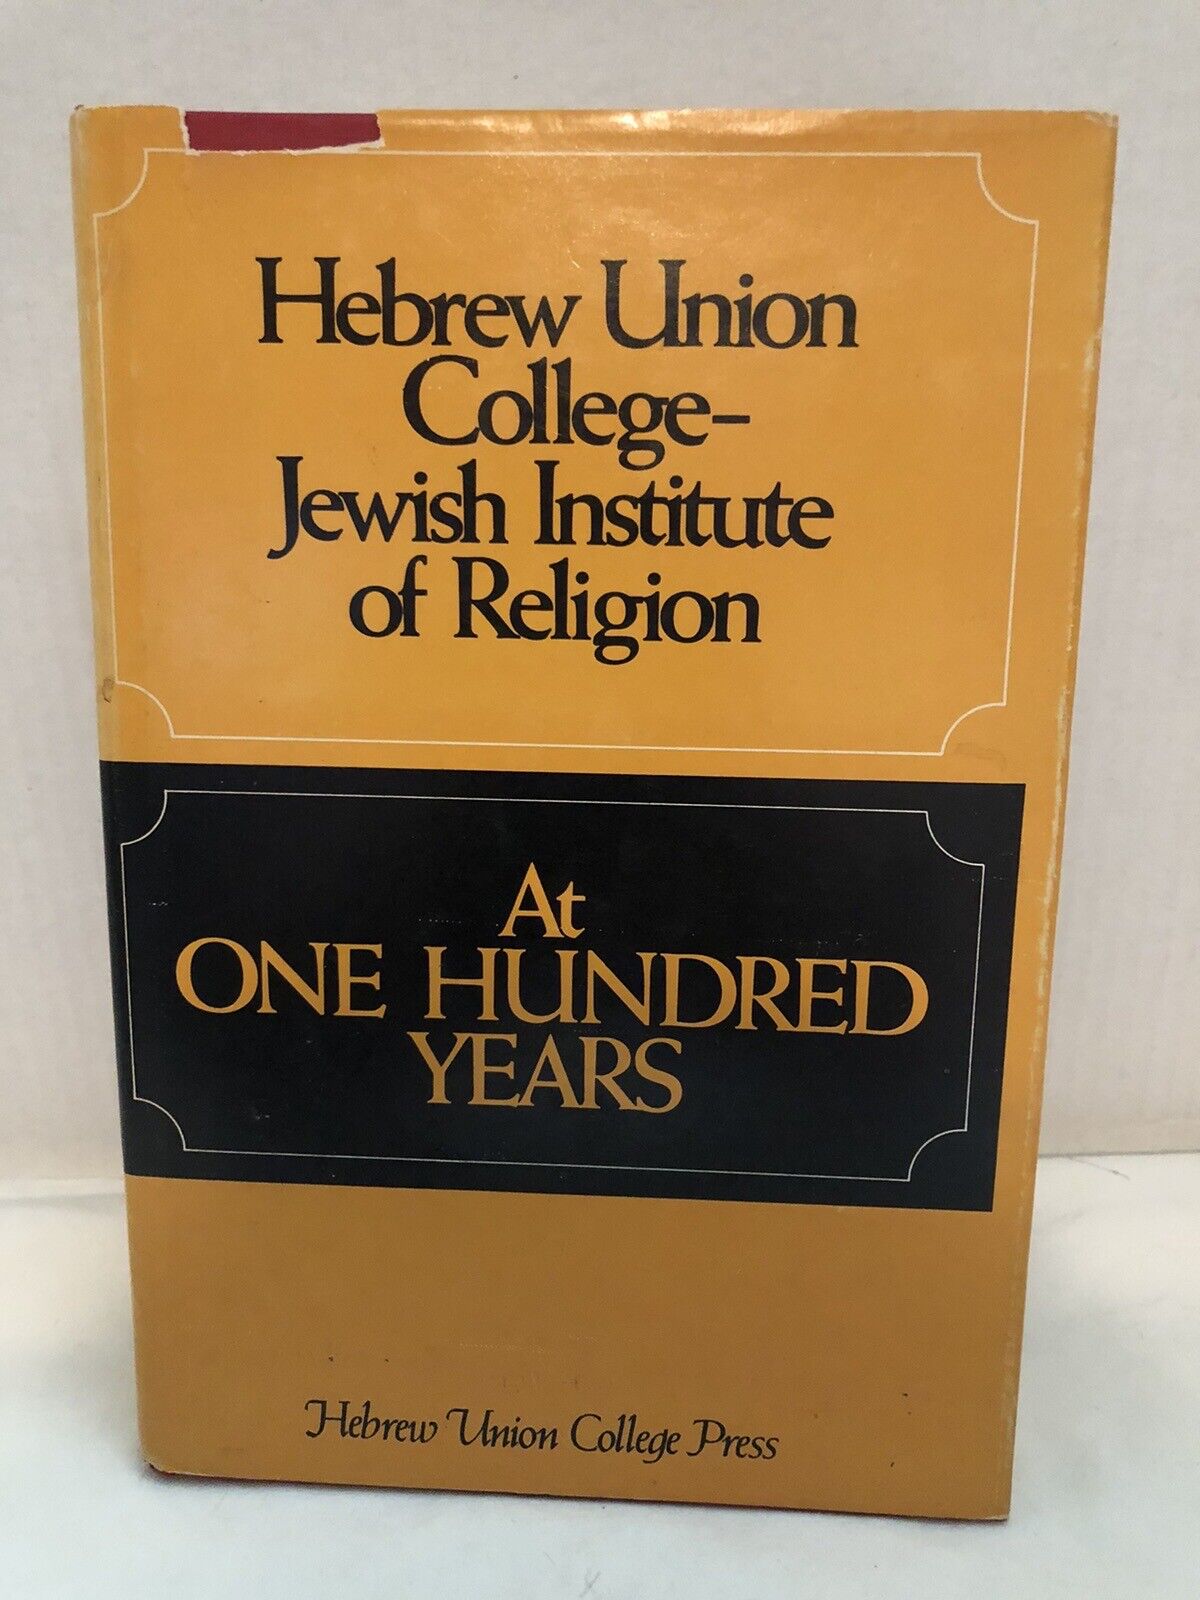 Hebrew Union College-Jewish Institute of Religion- At 100 Years